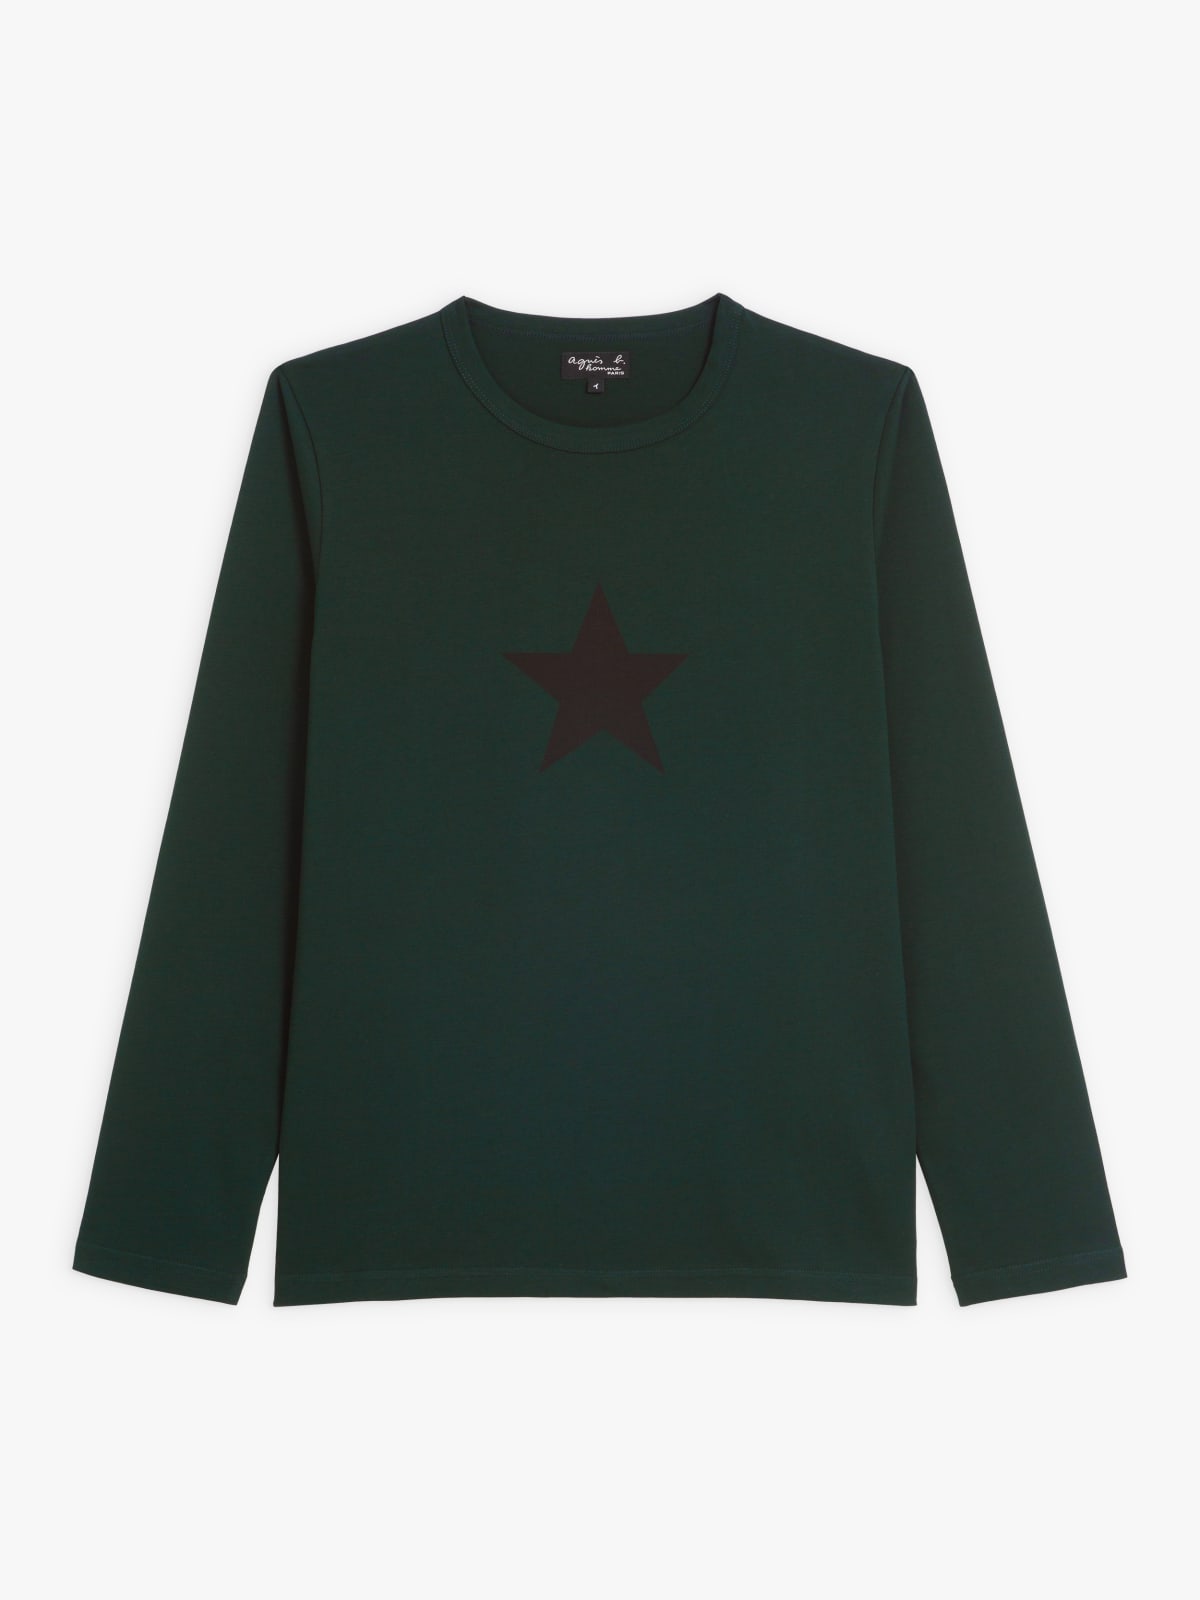 fir green long sleeves Coulos star t-shirt